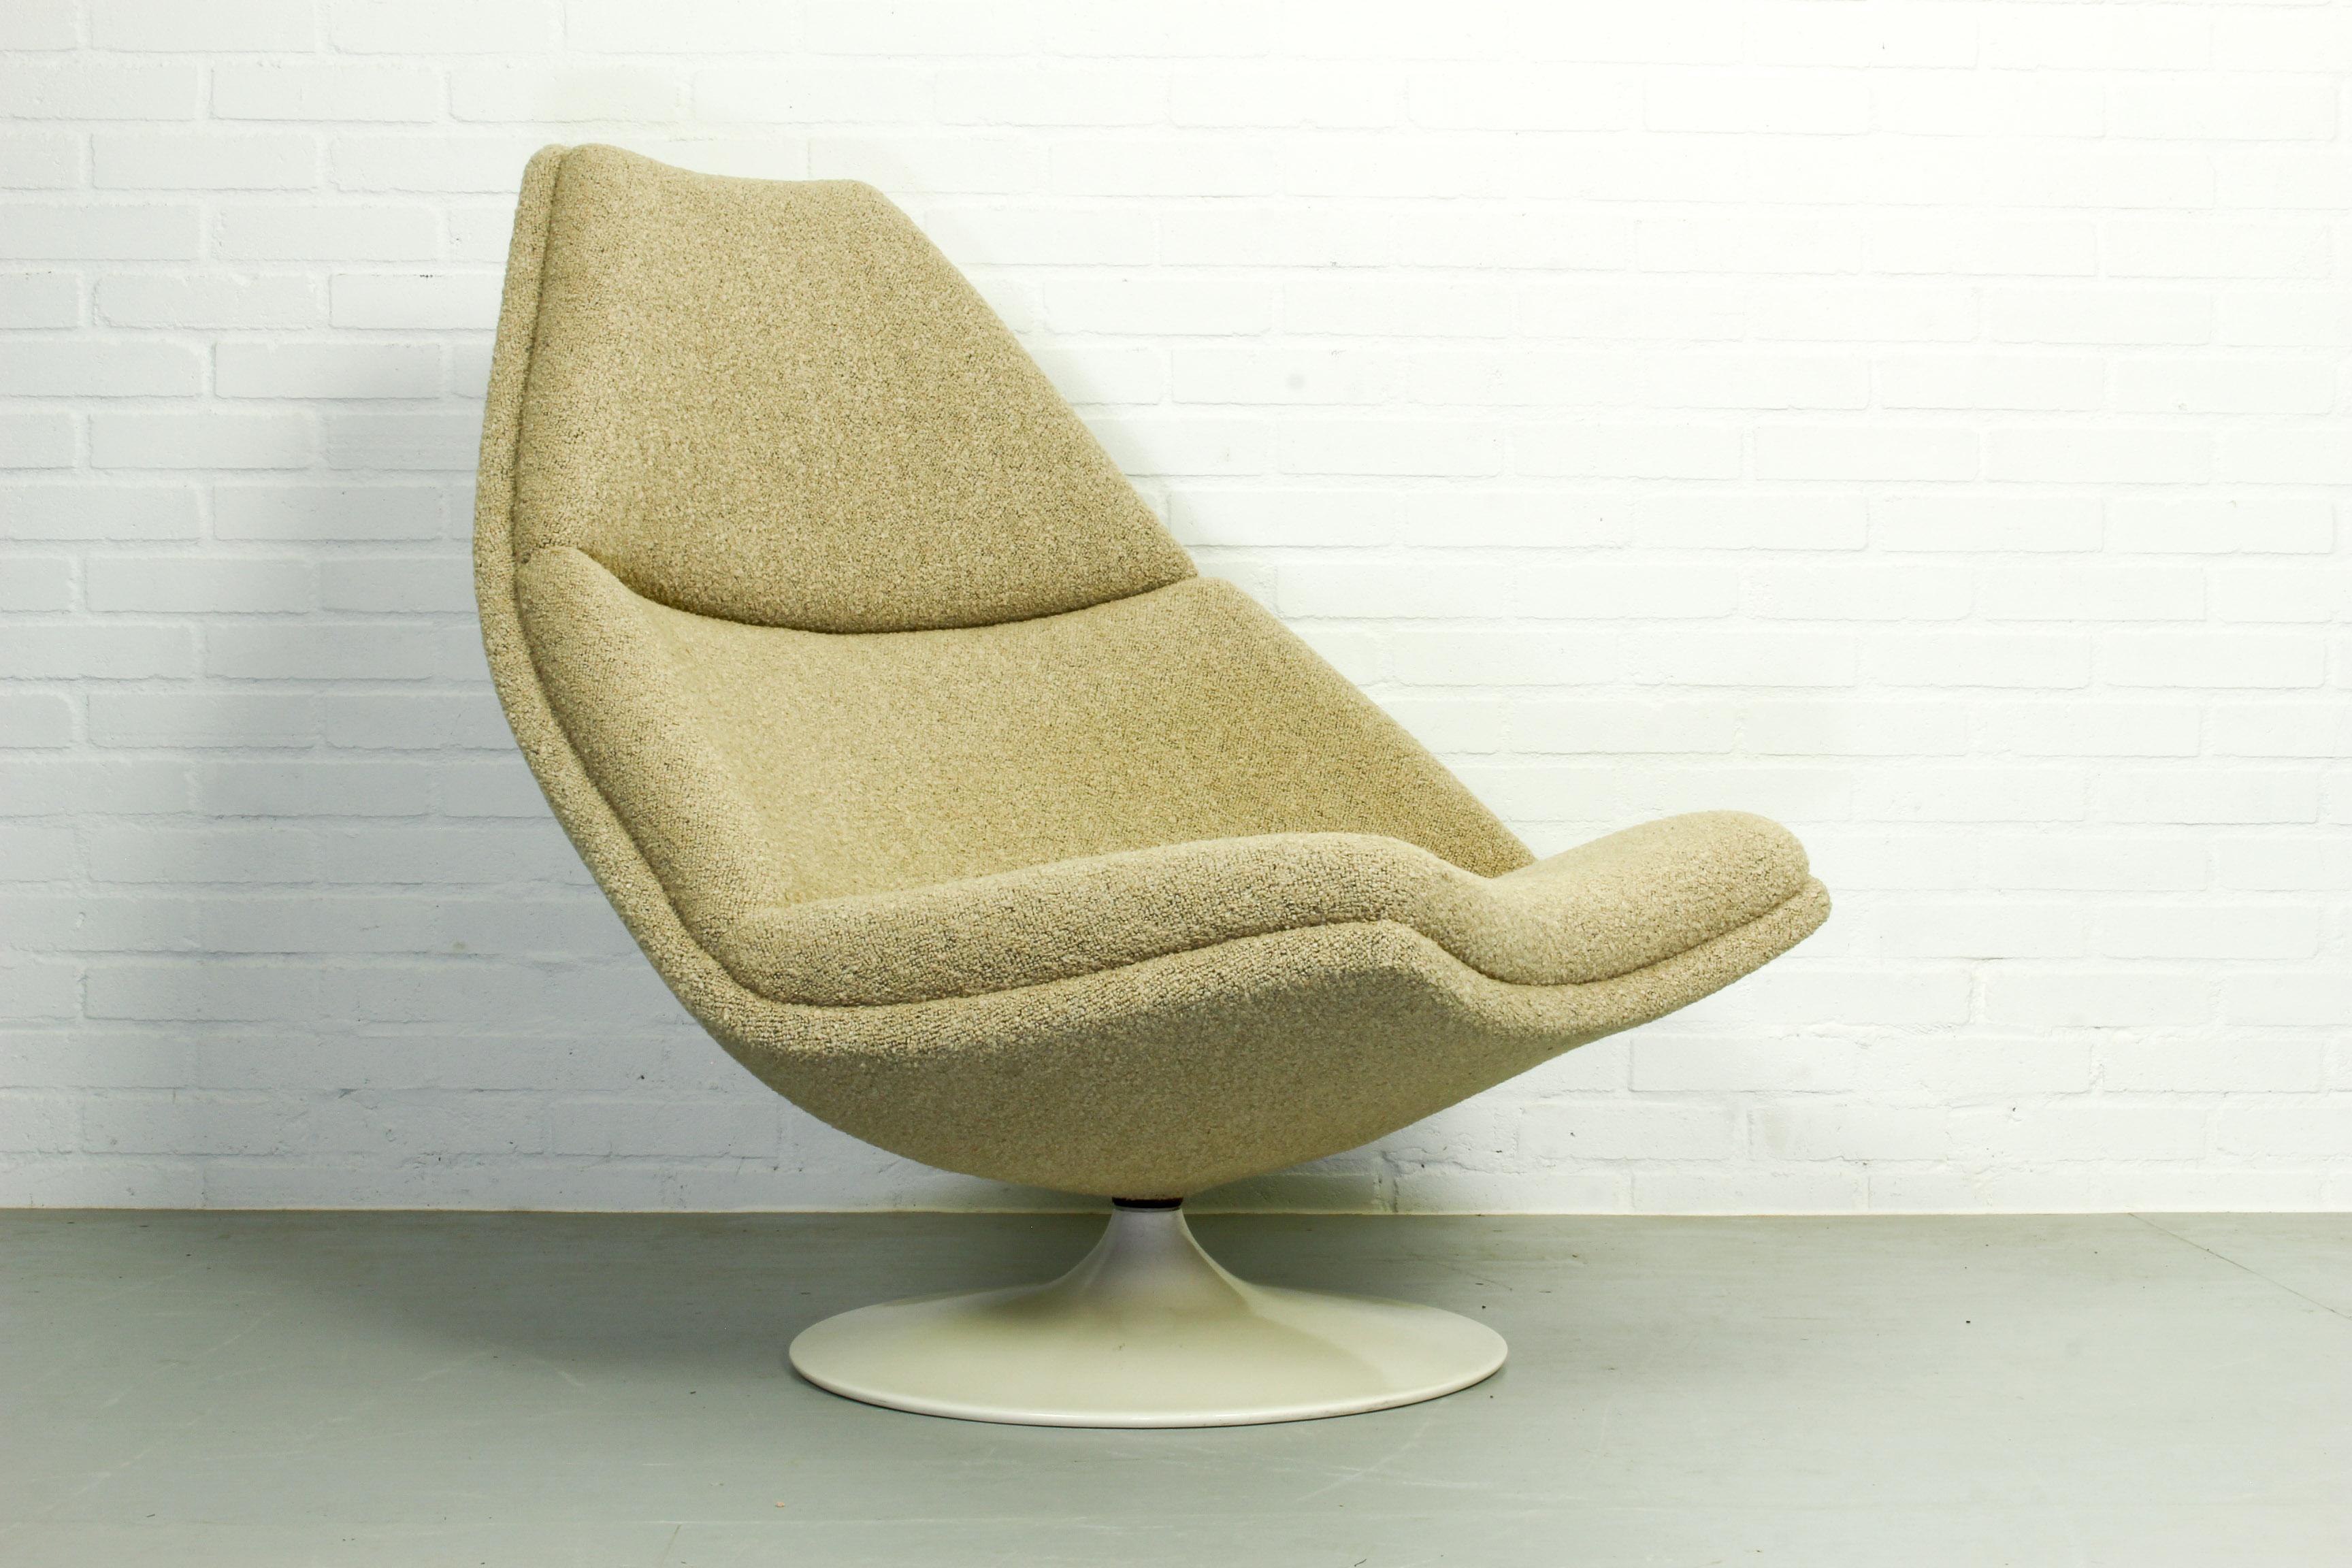 Dutch F590 Lounge Chair Designed by Geoffrey Harcourt for Artifort